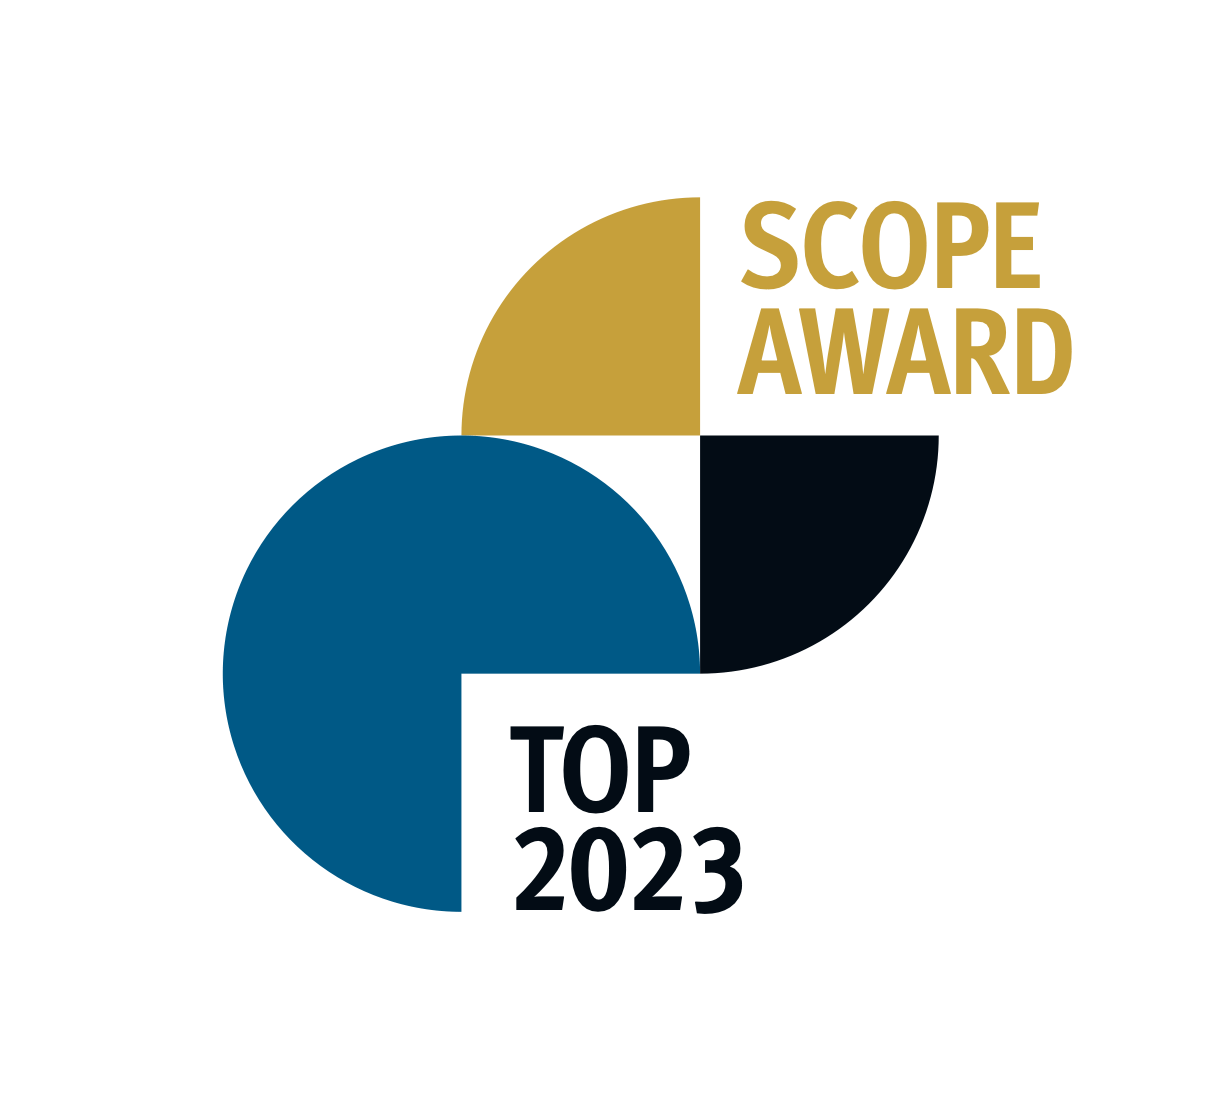 Berenberg Jobs - Careers Website - Awards - Scope Award Top 2023 Image.png